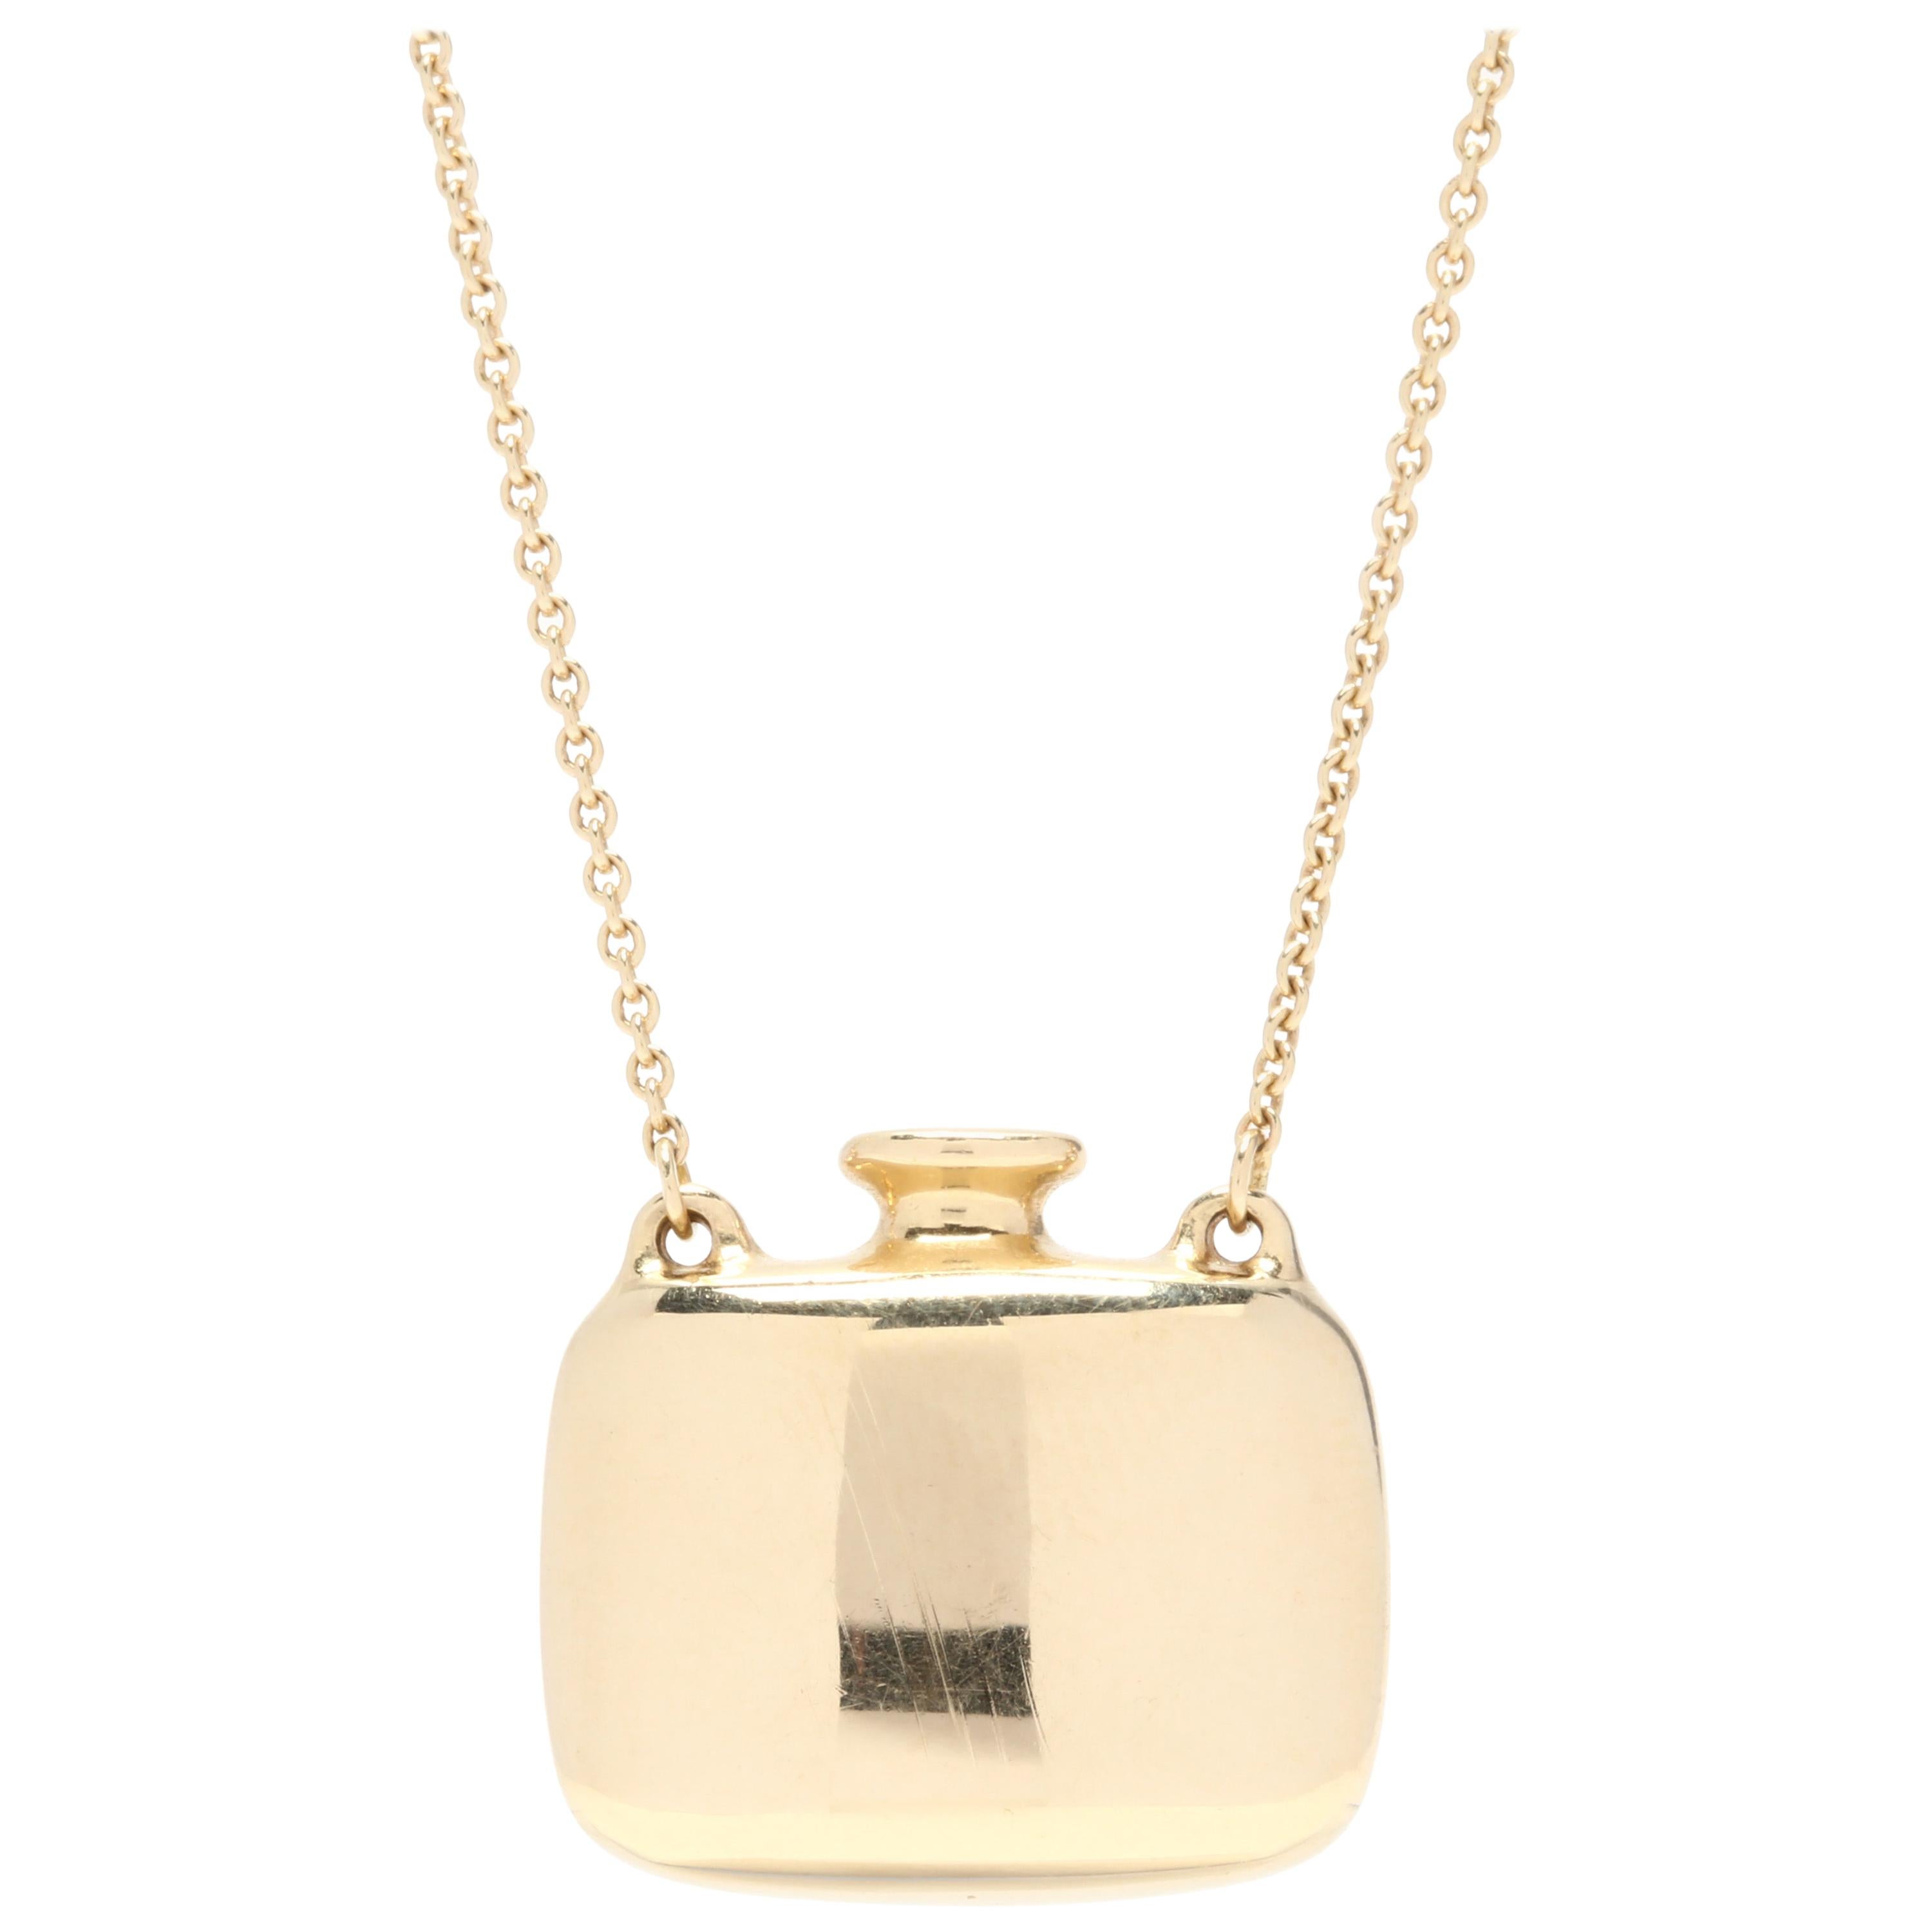 Elsa Peretti for Tiffany & Co. 18 Karat Yellow Gold Open Bottle Pendant Necklace